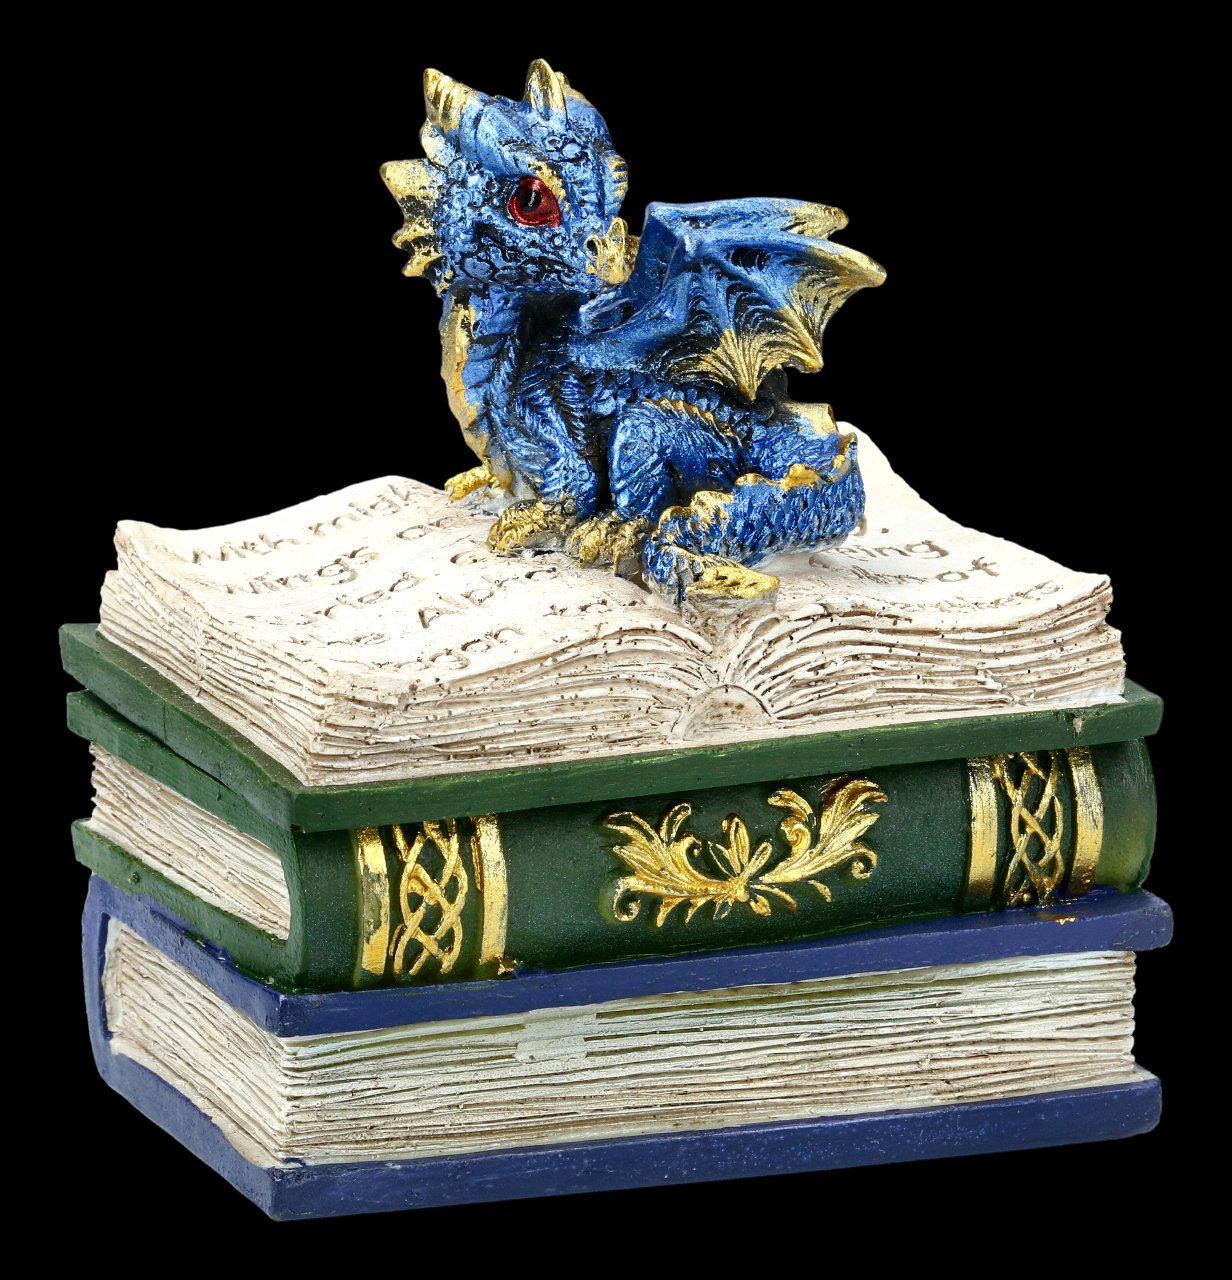 Drachen Schatulle - Dragonling Diaries - blau